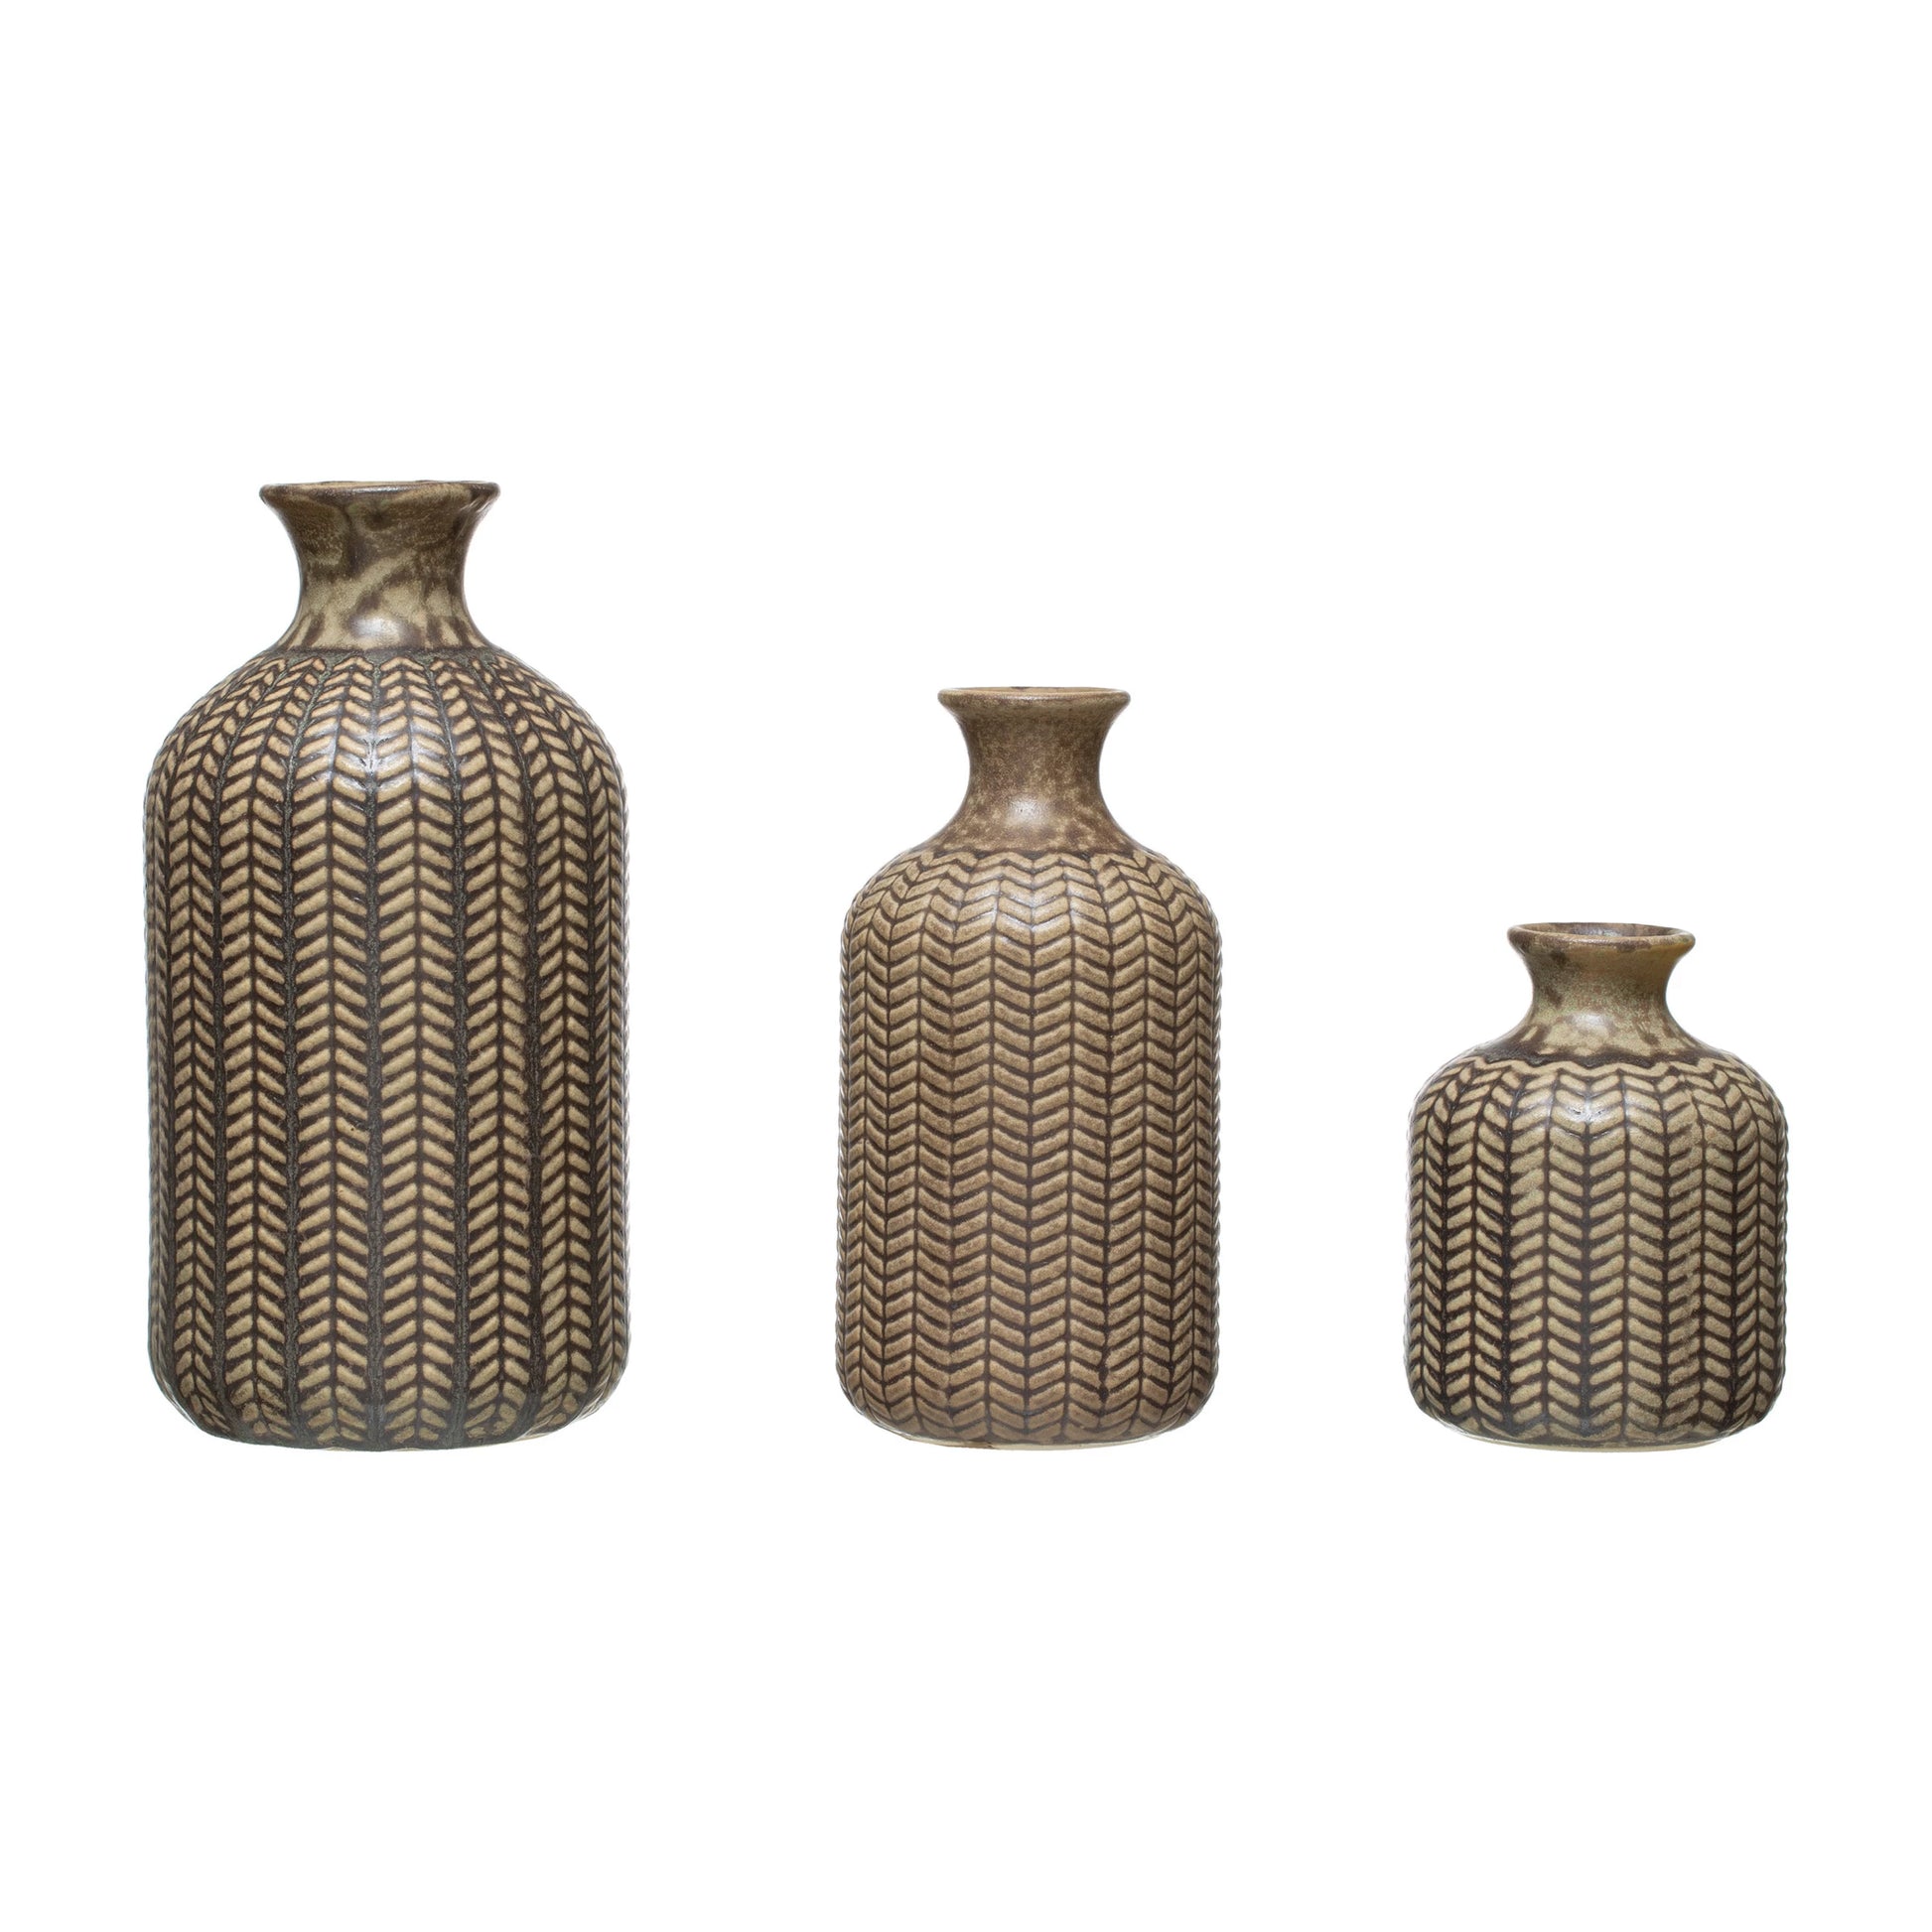 3 sizes of Embossed Stoneware Vases on a white background.